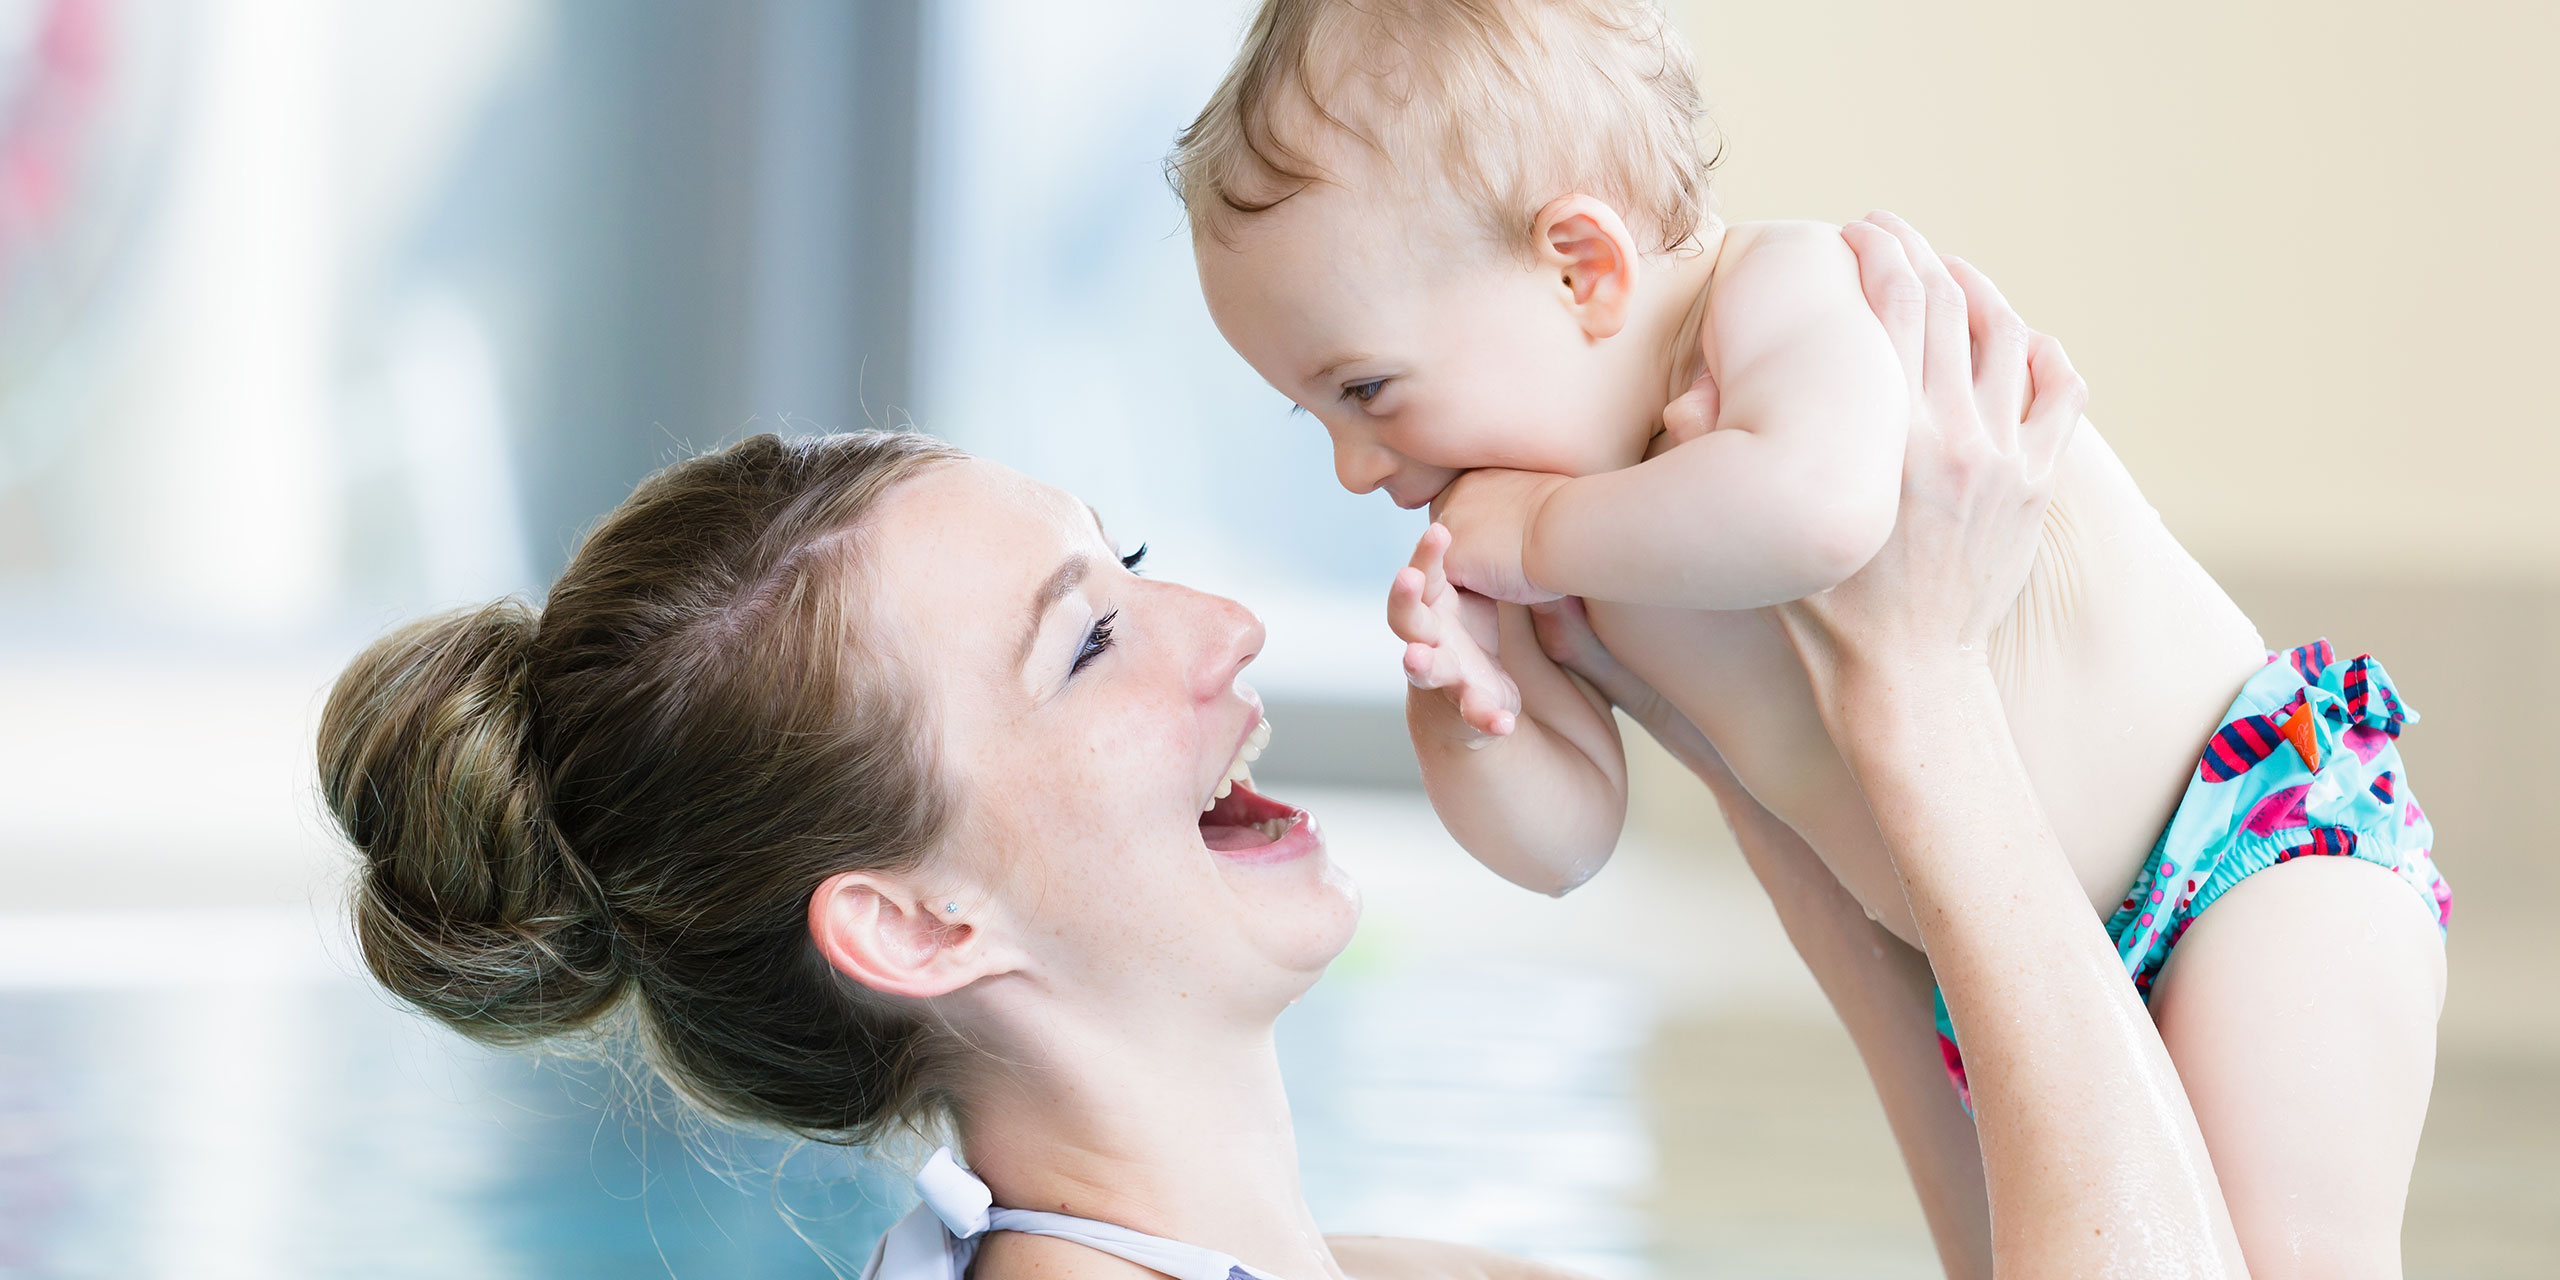 Mom with Baby in Pool; Courtesy of Kzenon/Shutterstock.com